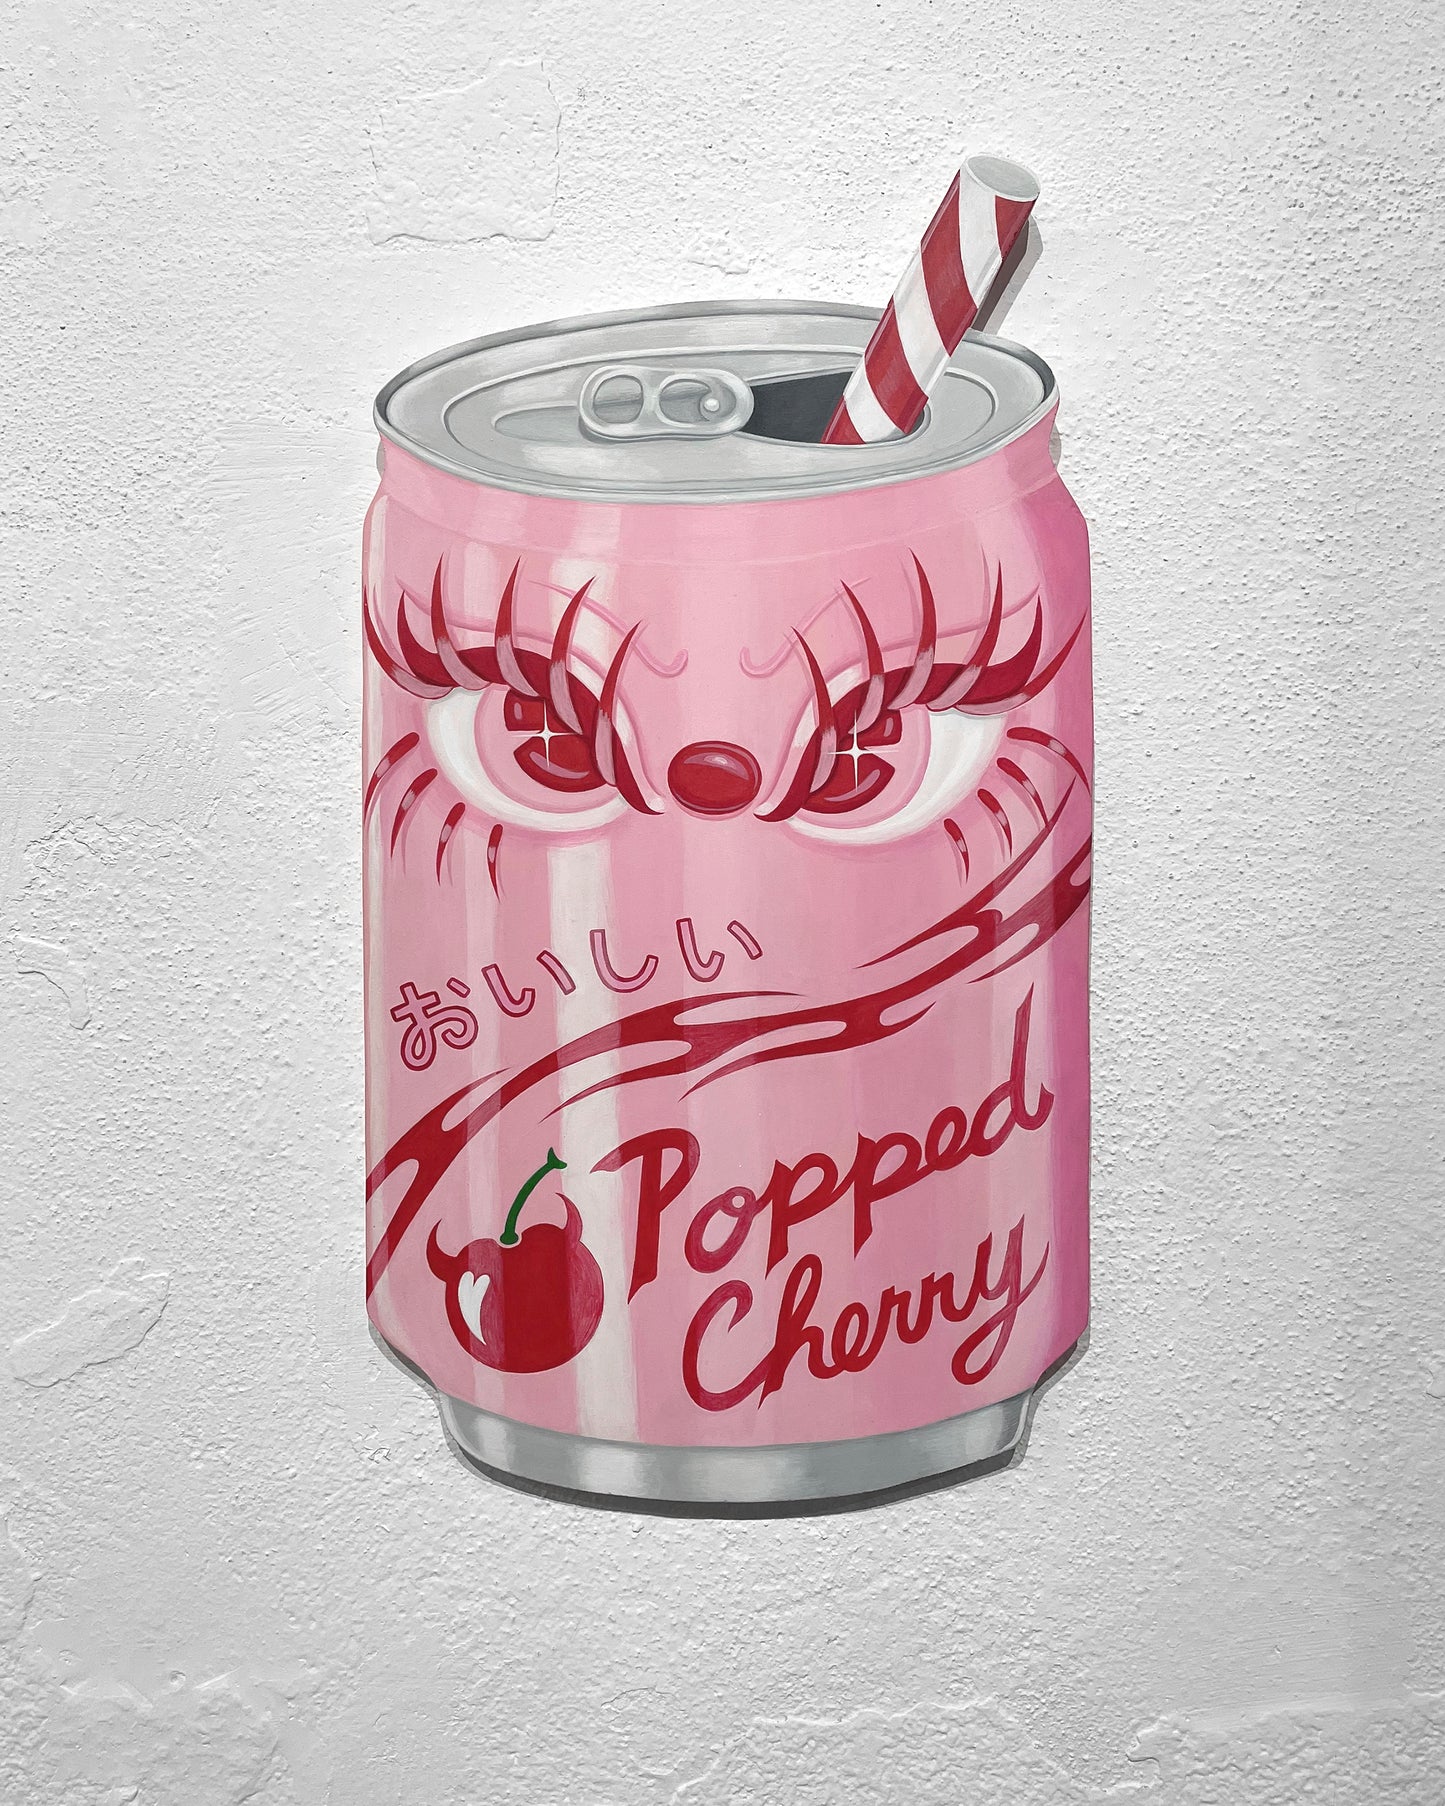 Popped Cherry